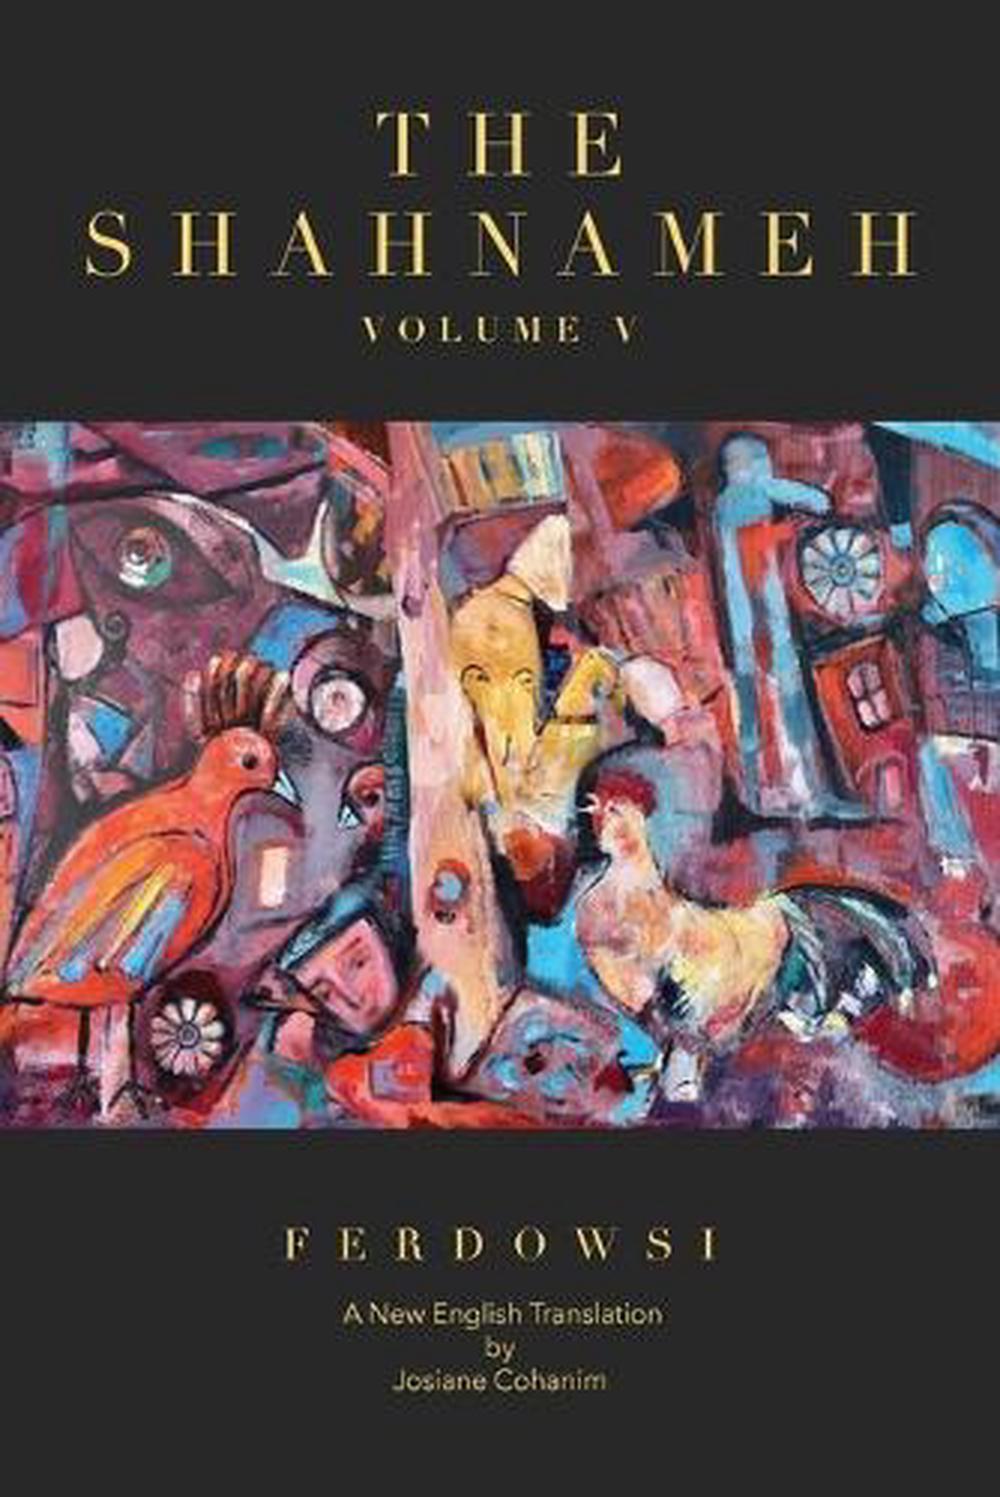 The Shahnameh Volume V: A New English Translation by Hakim Abul-Ghassem Ferdowsi